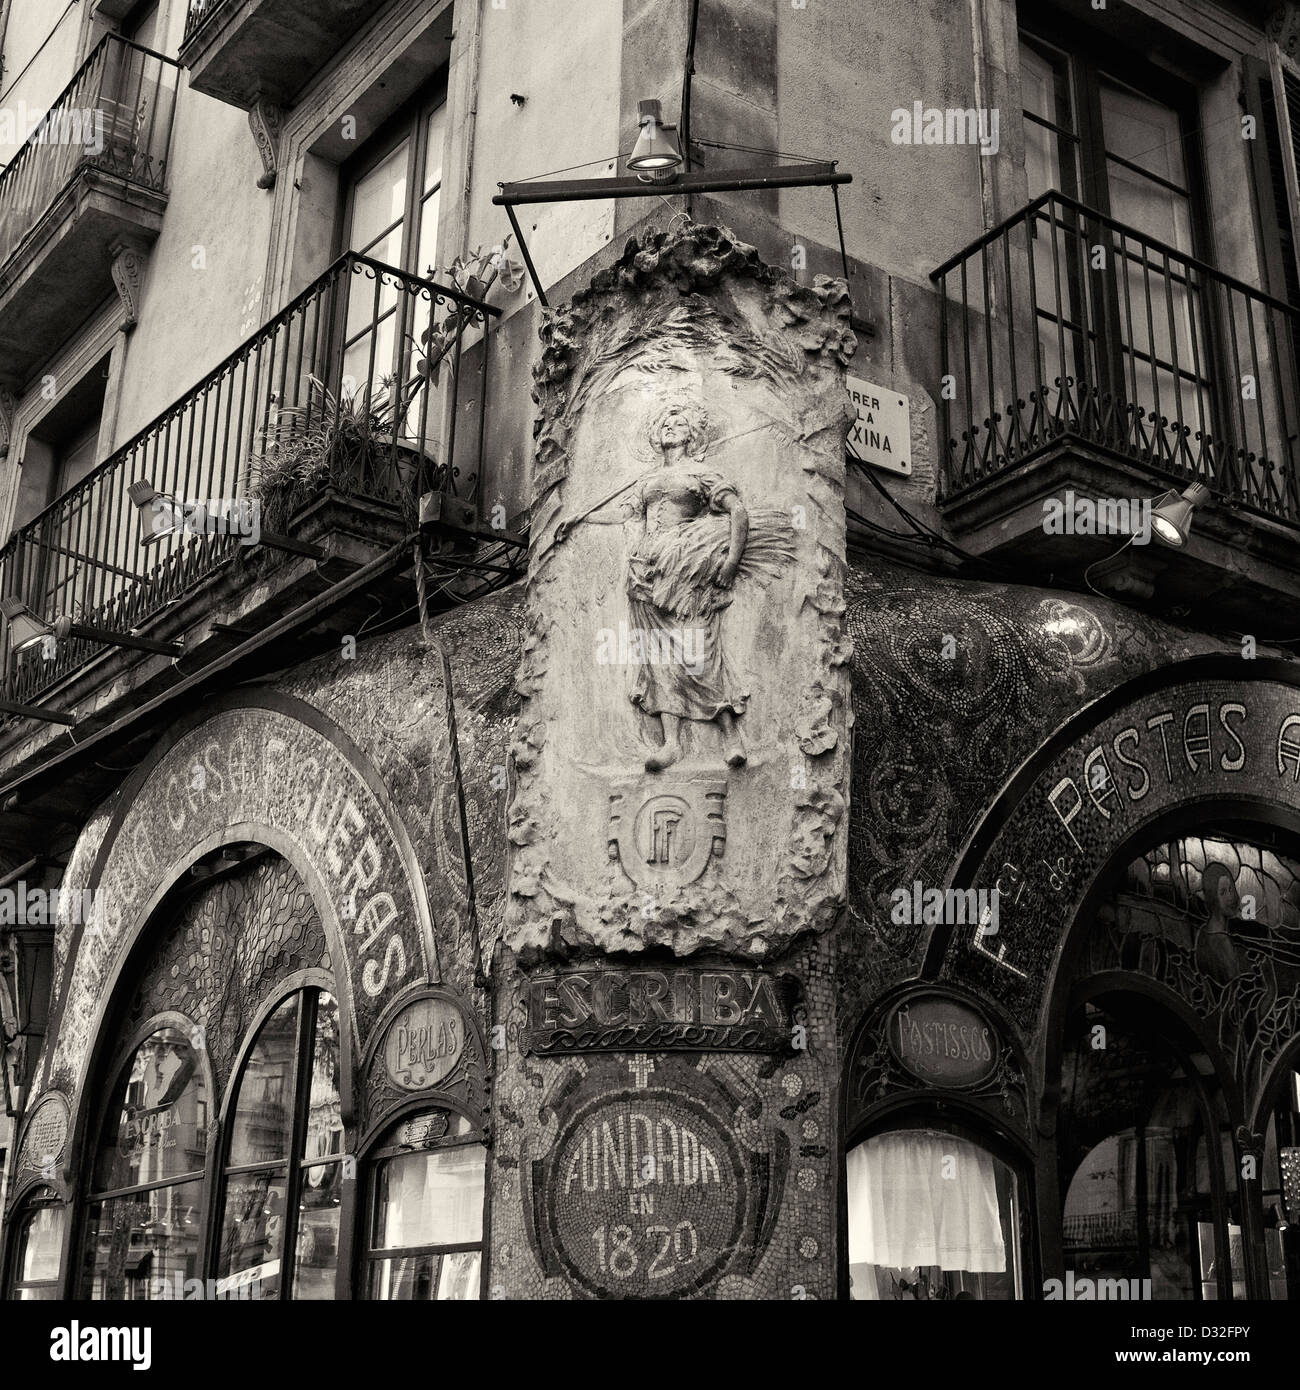 Antigua Casa Figueras, Catalan Art Nouveau pastry shop dating from 1902, Las Ramblas, Barcelona Stock Photo